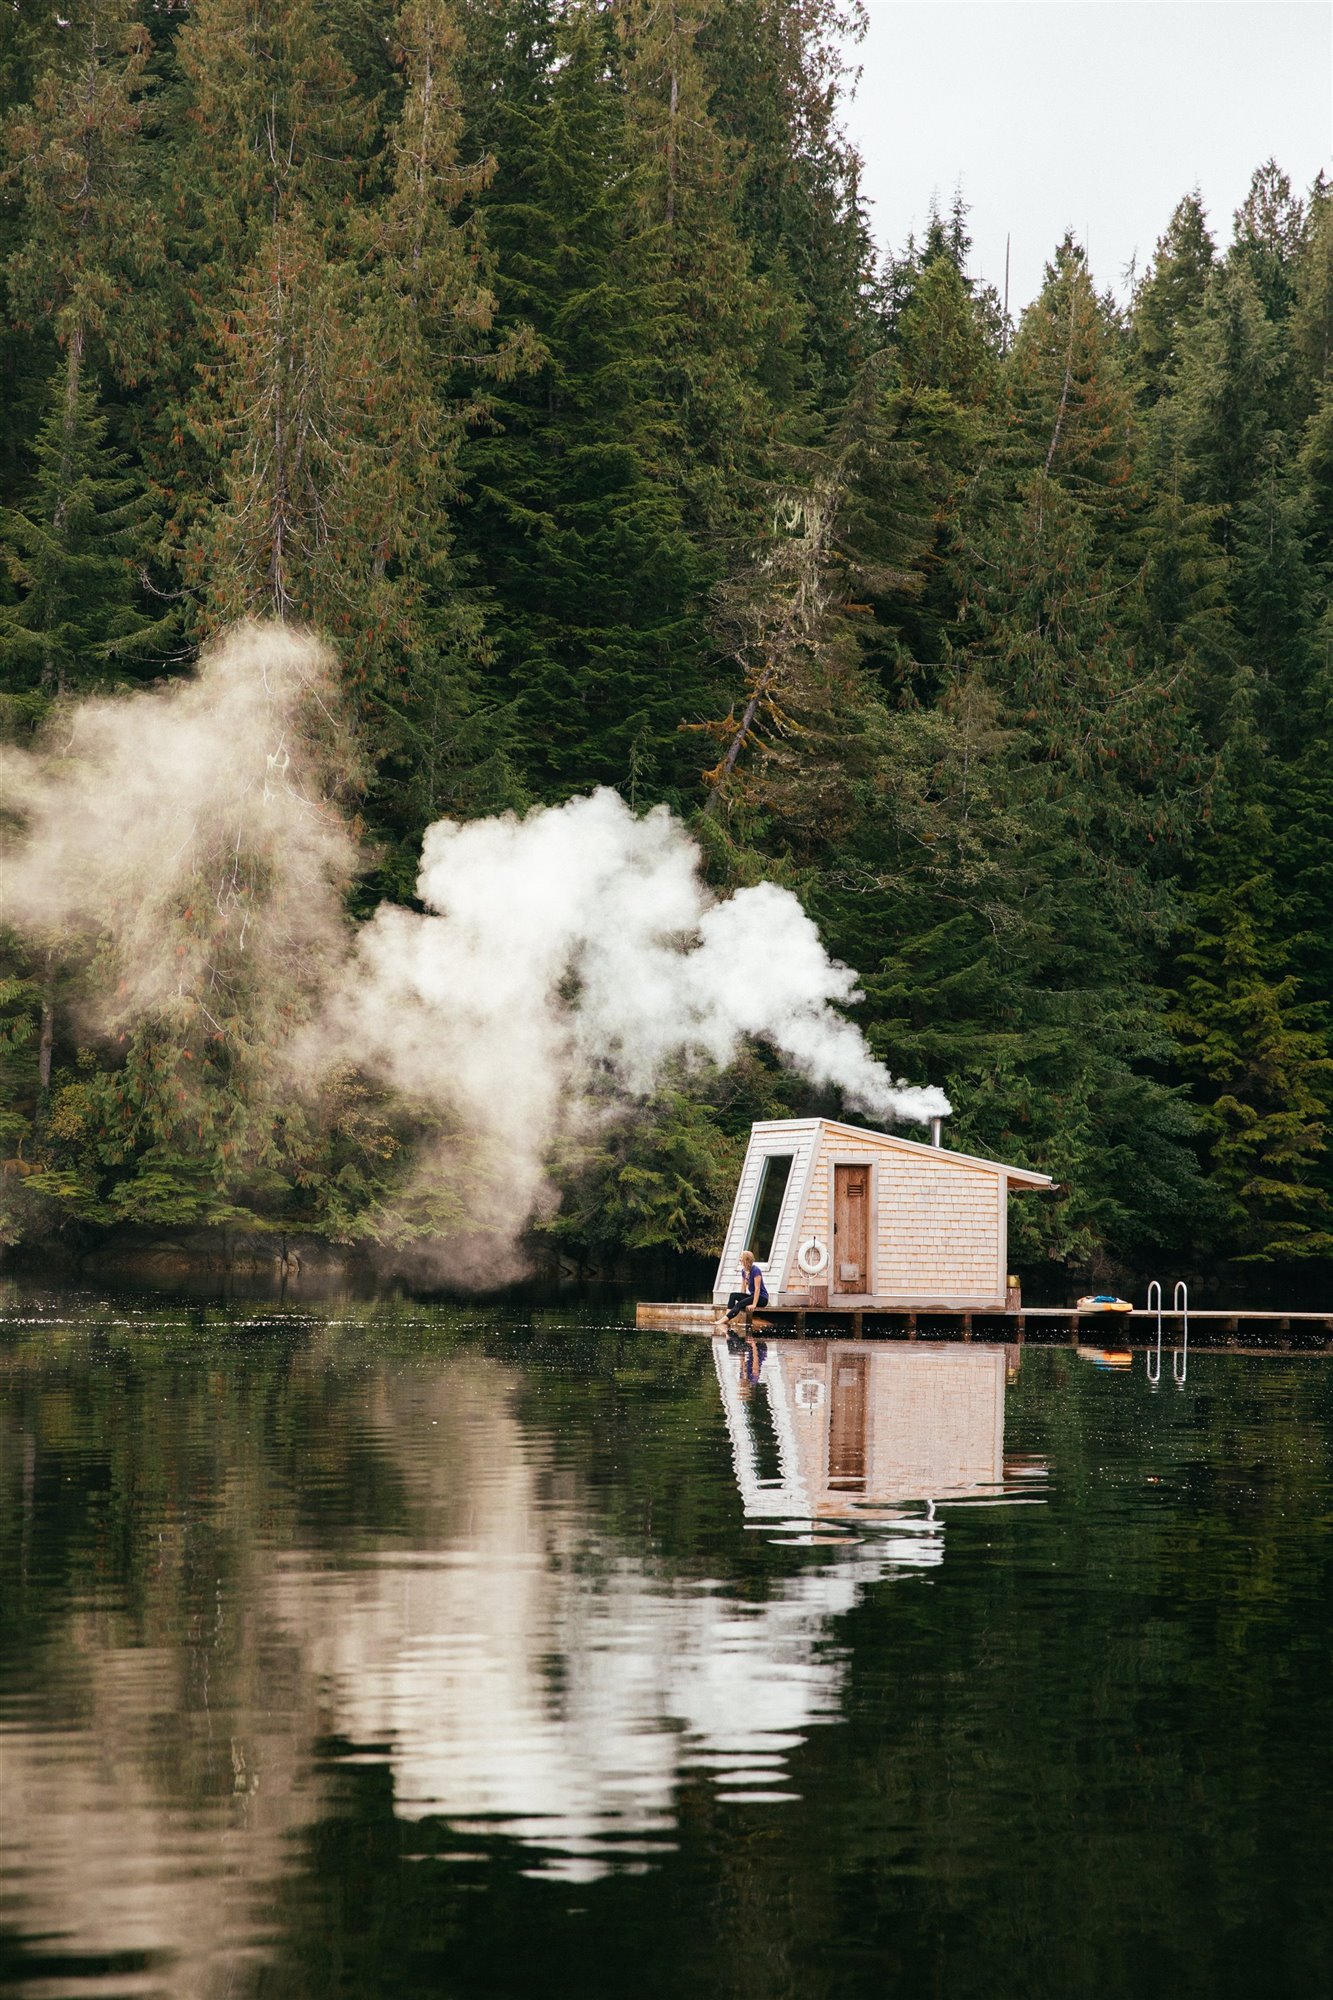 Cabaña moderna con Sauna de madera flotando en mitad de un lago con chimenea